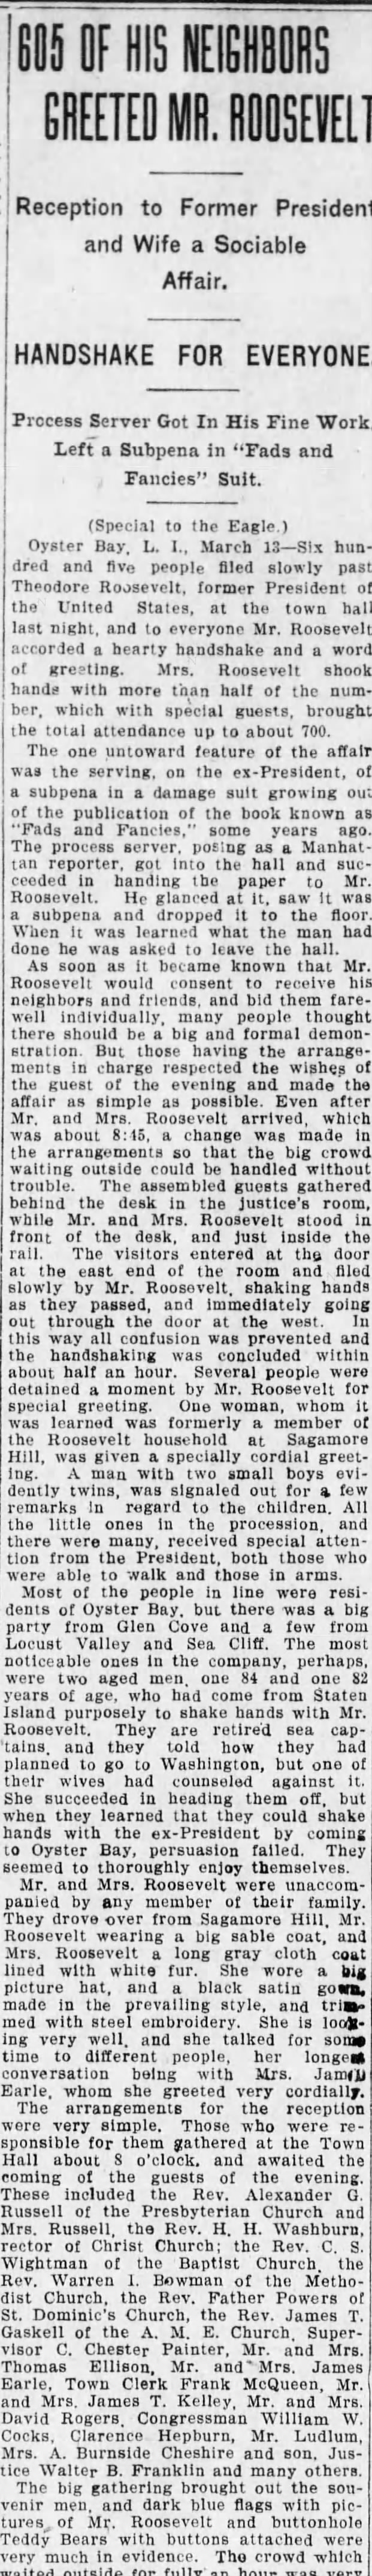 Roosevelt returns reception march 13, 1909